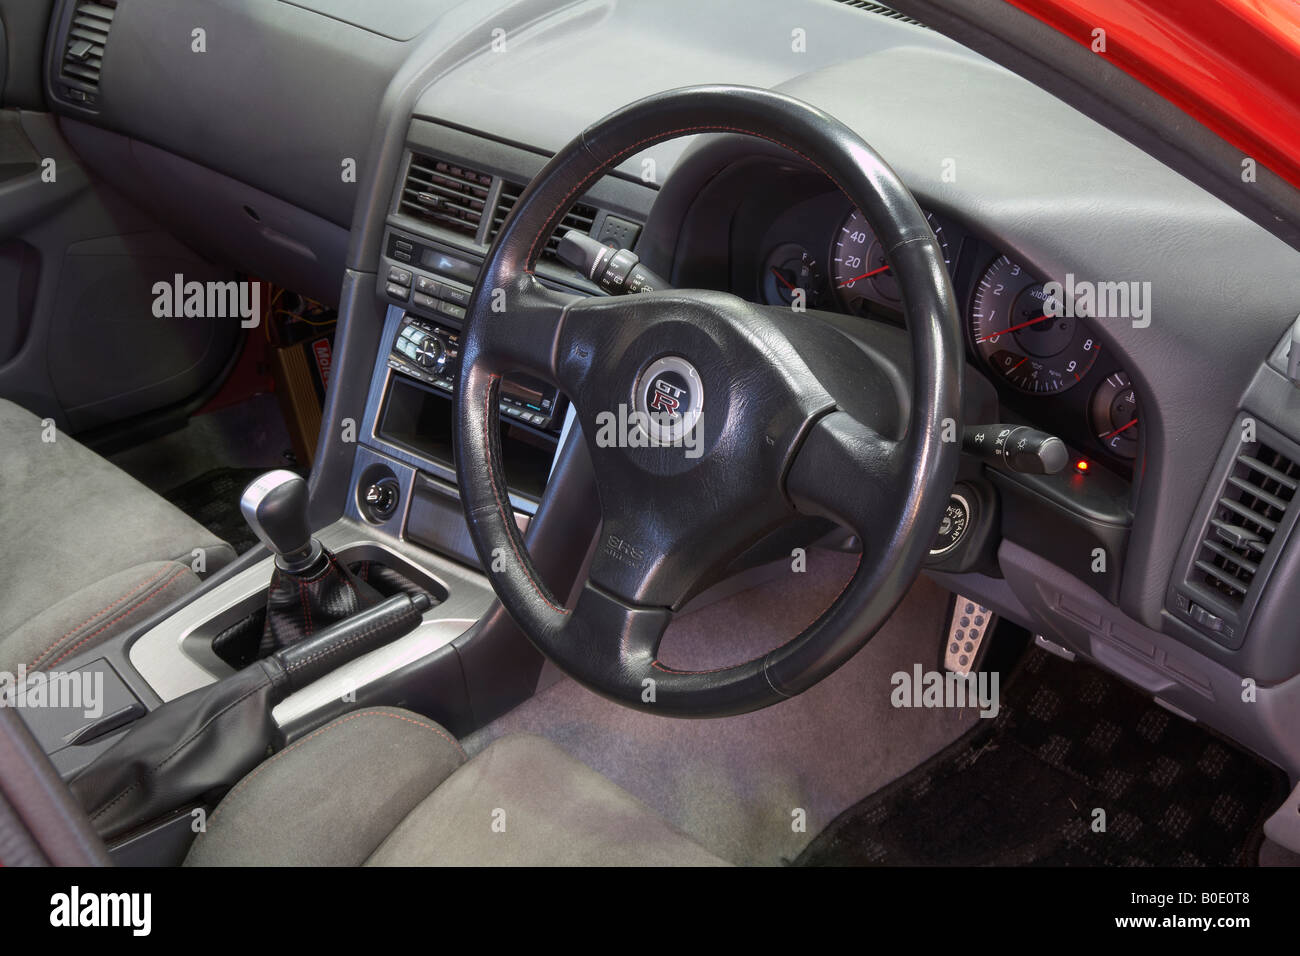 Nissan Steering Wheel Stockfotos Nissan Steering Wheel